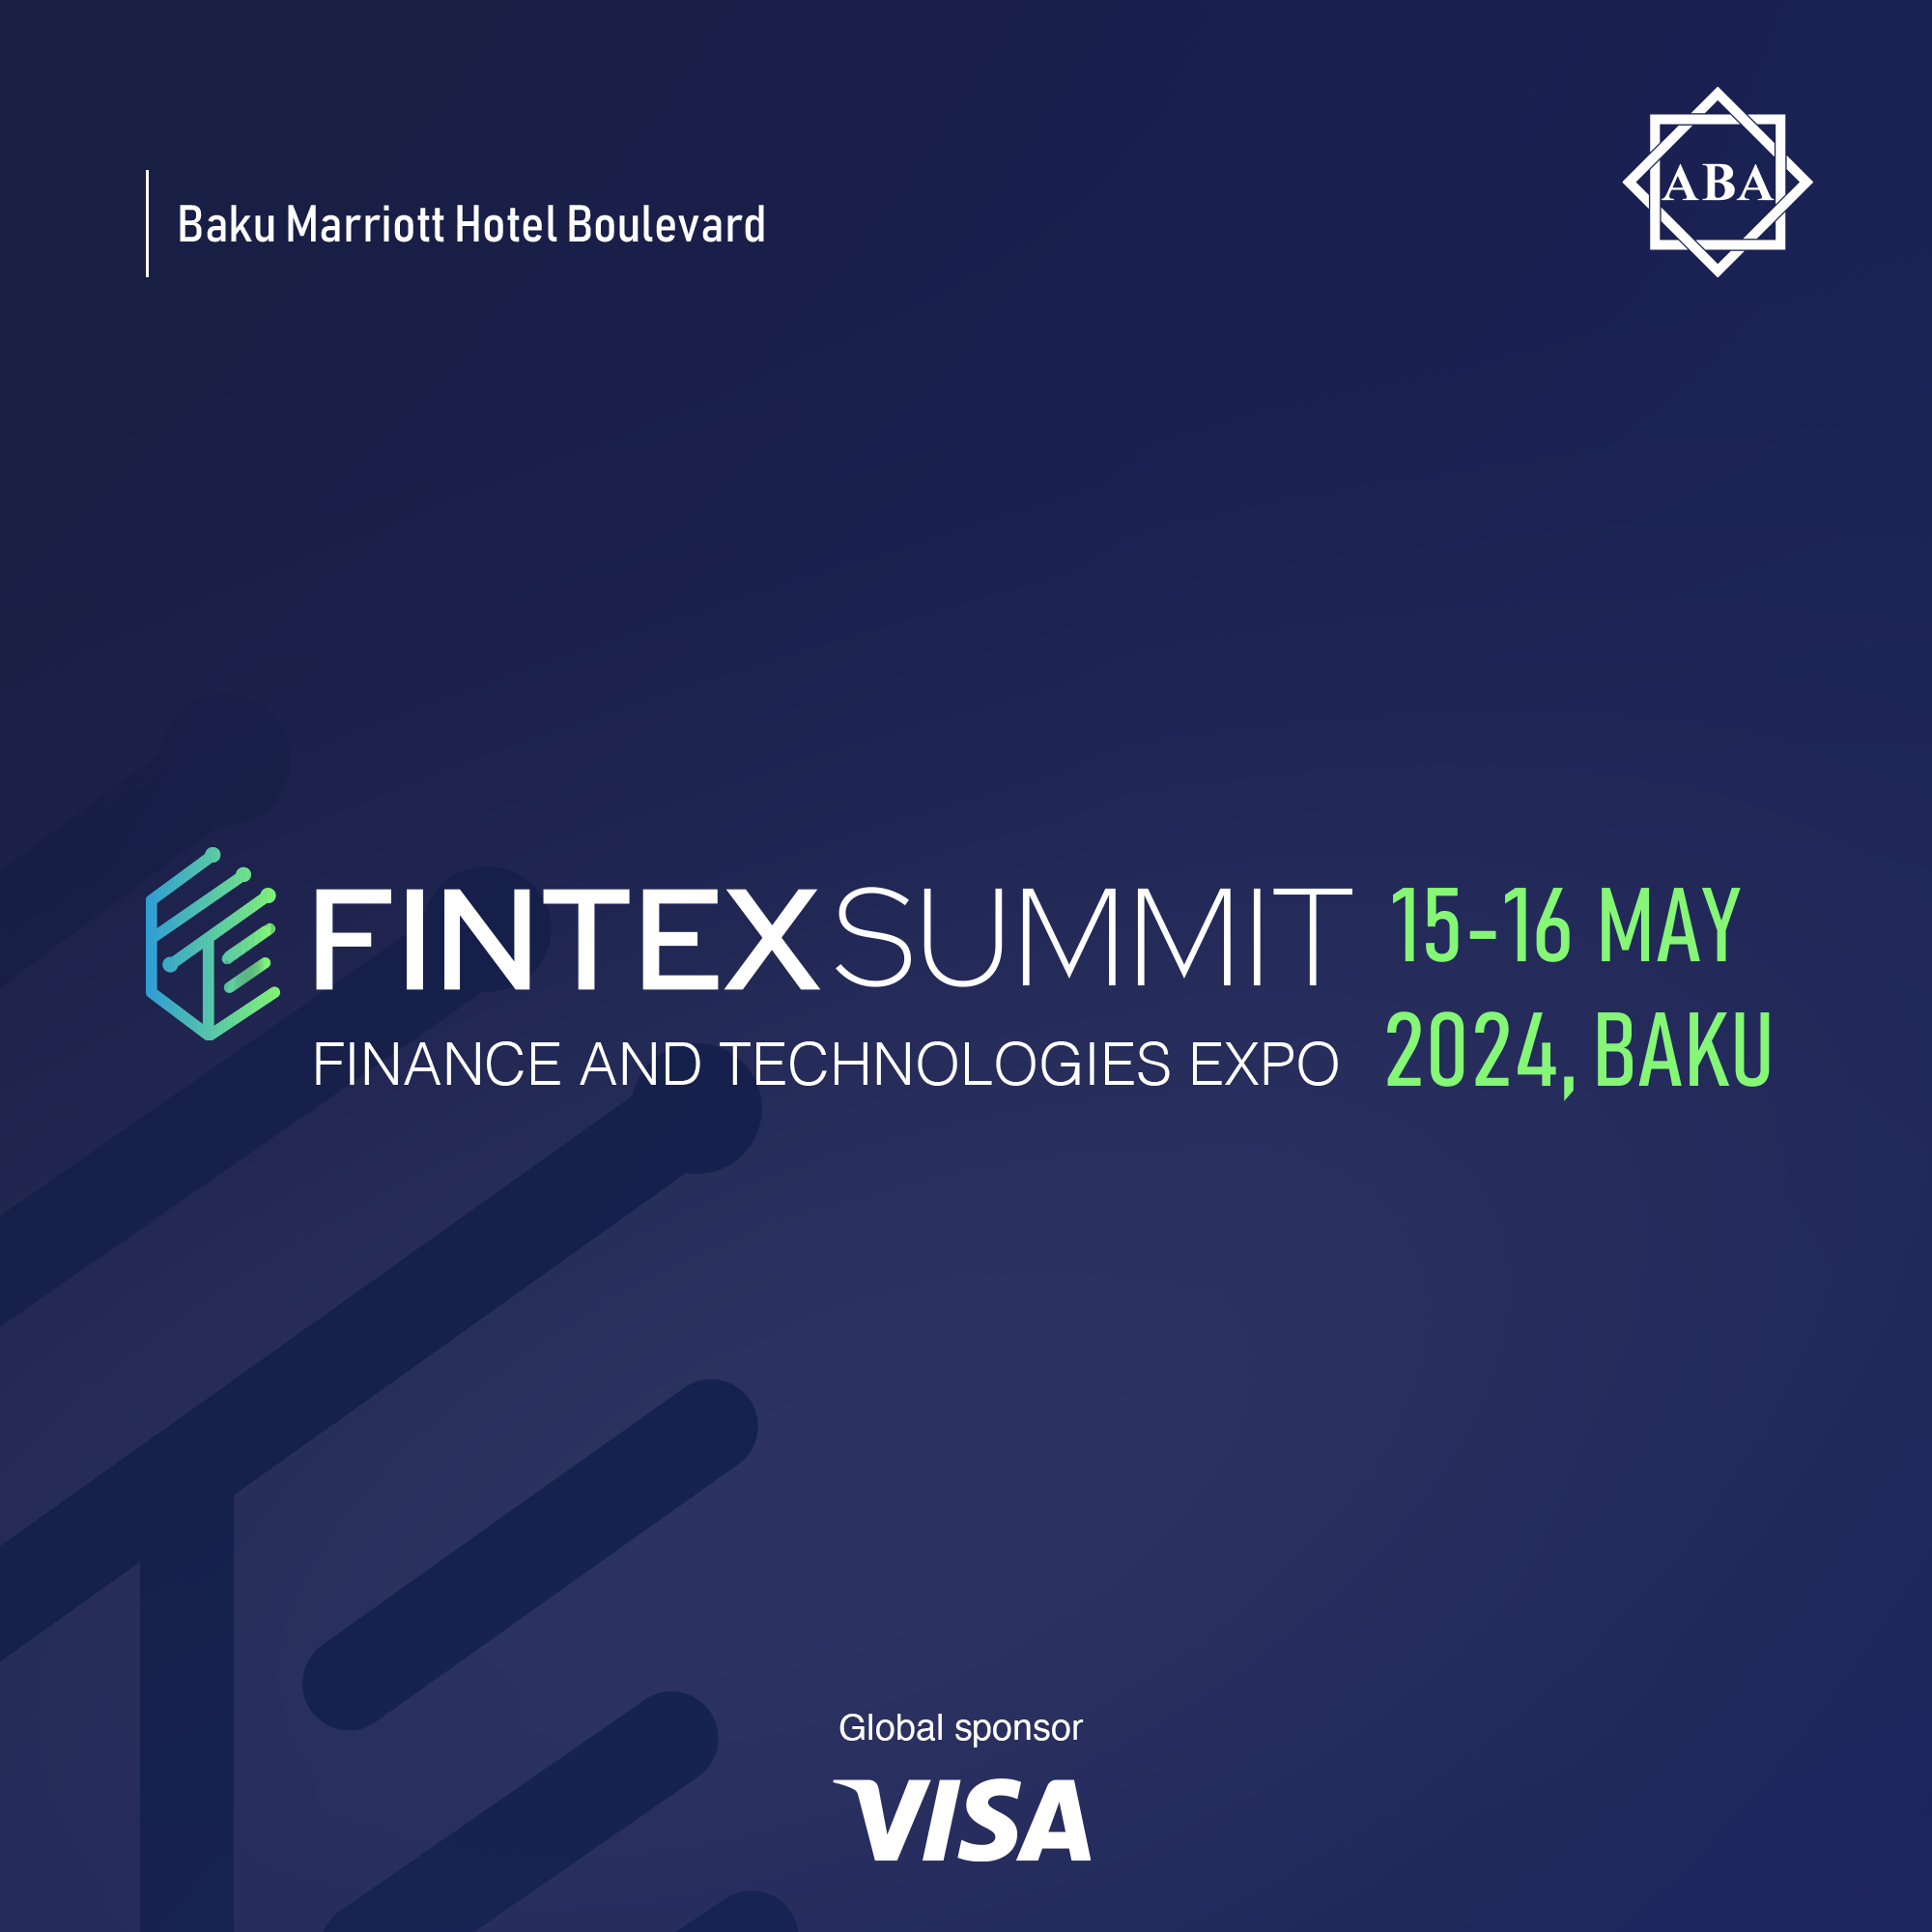 Fintex Summit 2024 - Finance and Technologies Expo, Baku, Absheron, Azerbaijan